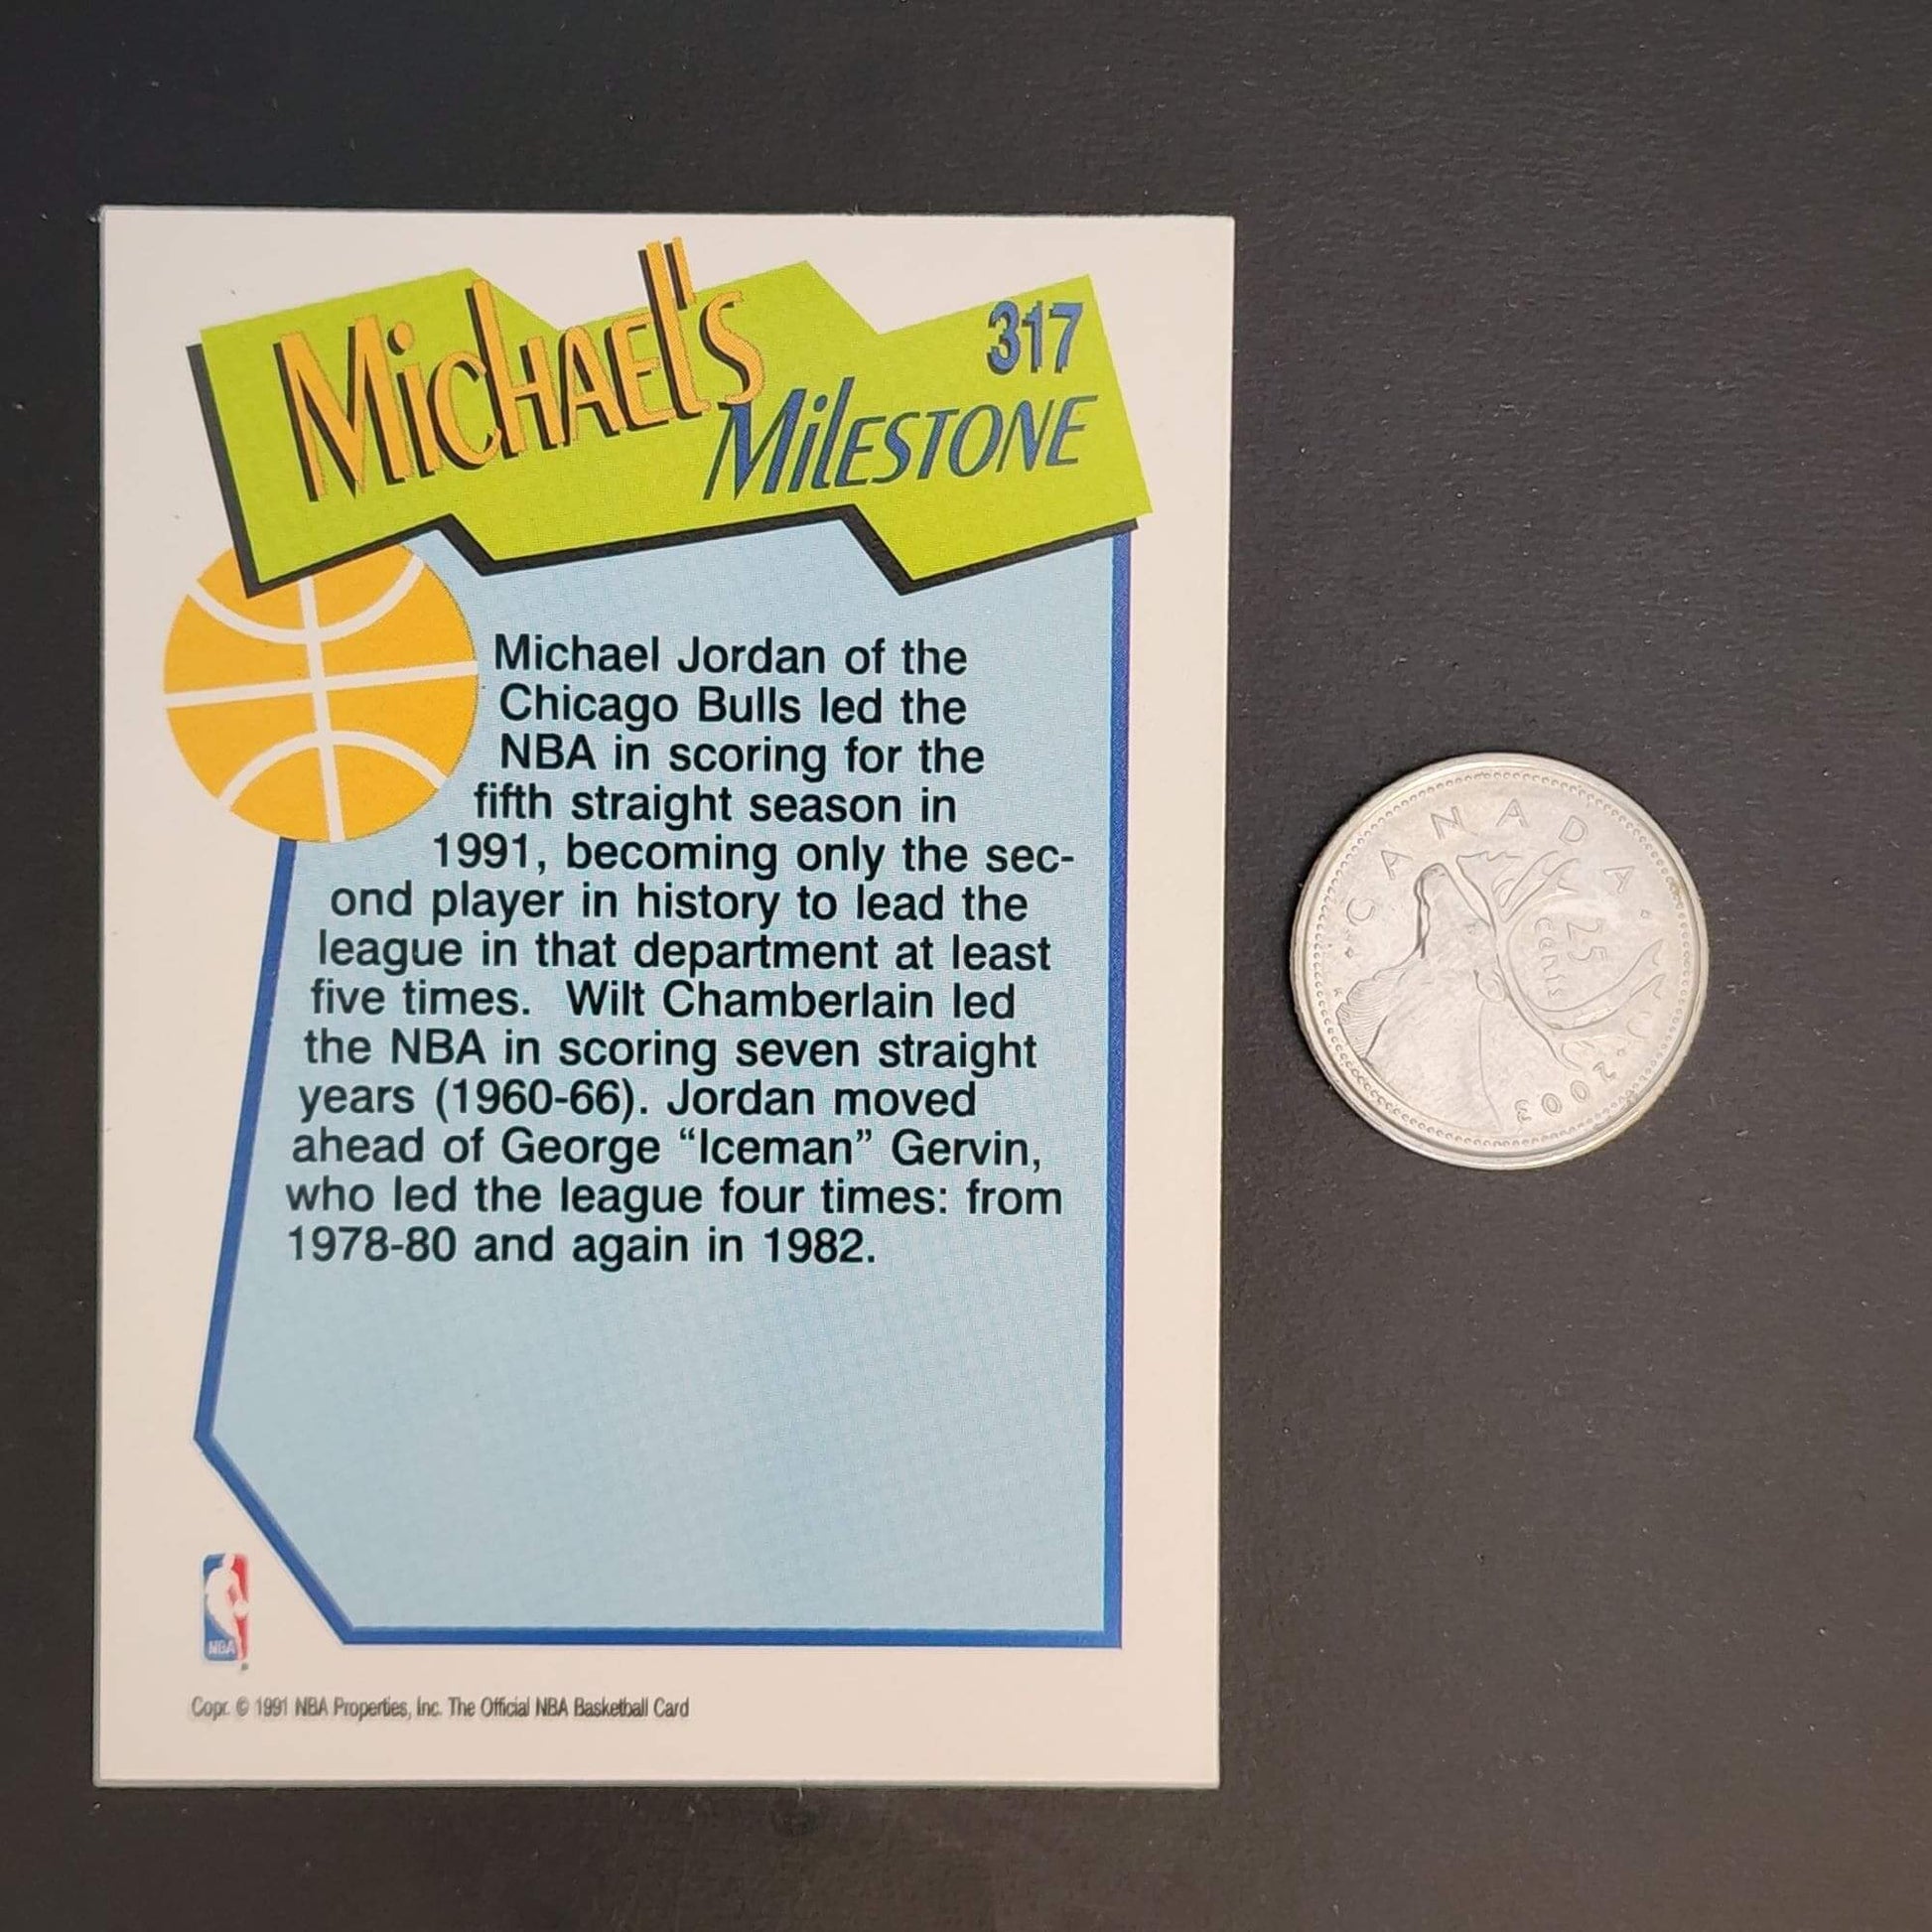 Michael Jordan basketball card with a quarter for size comparison.